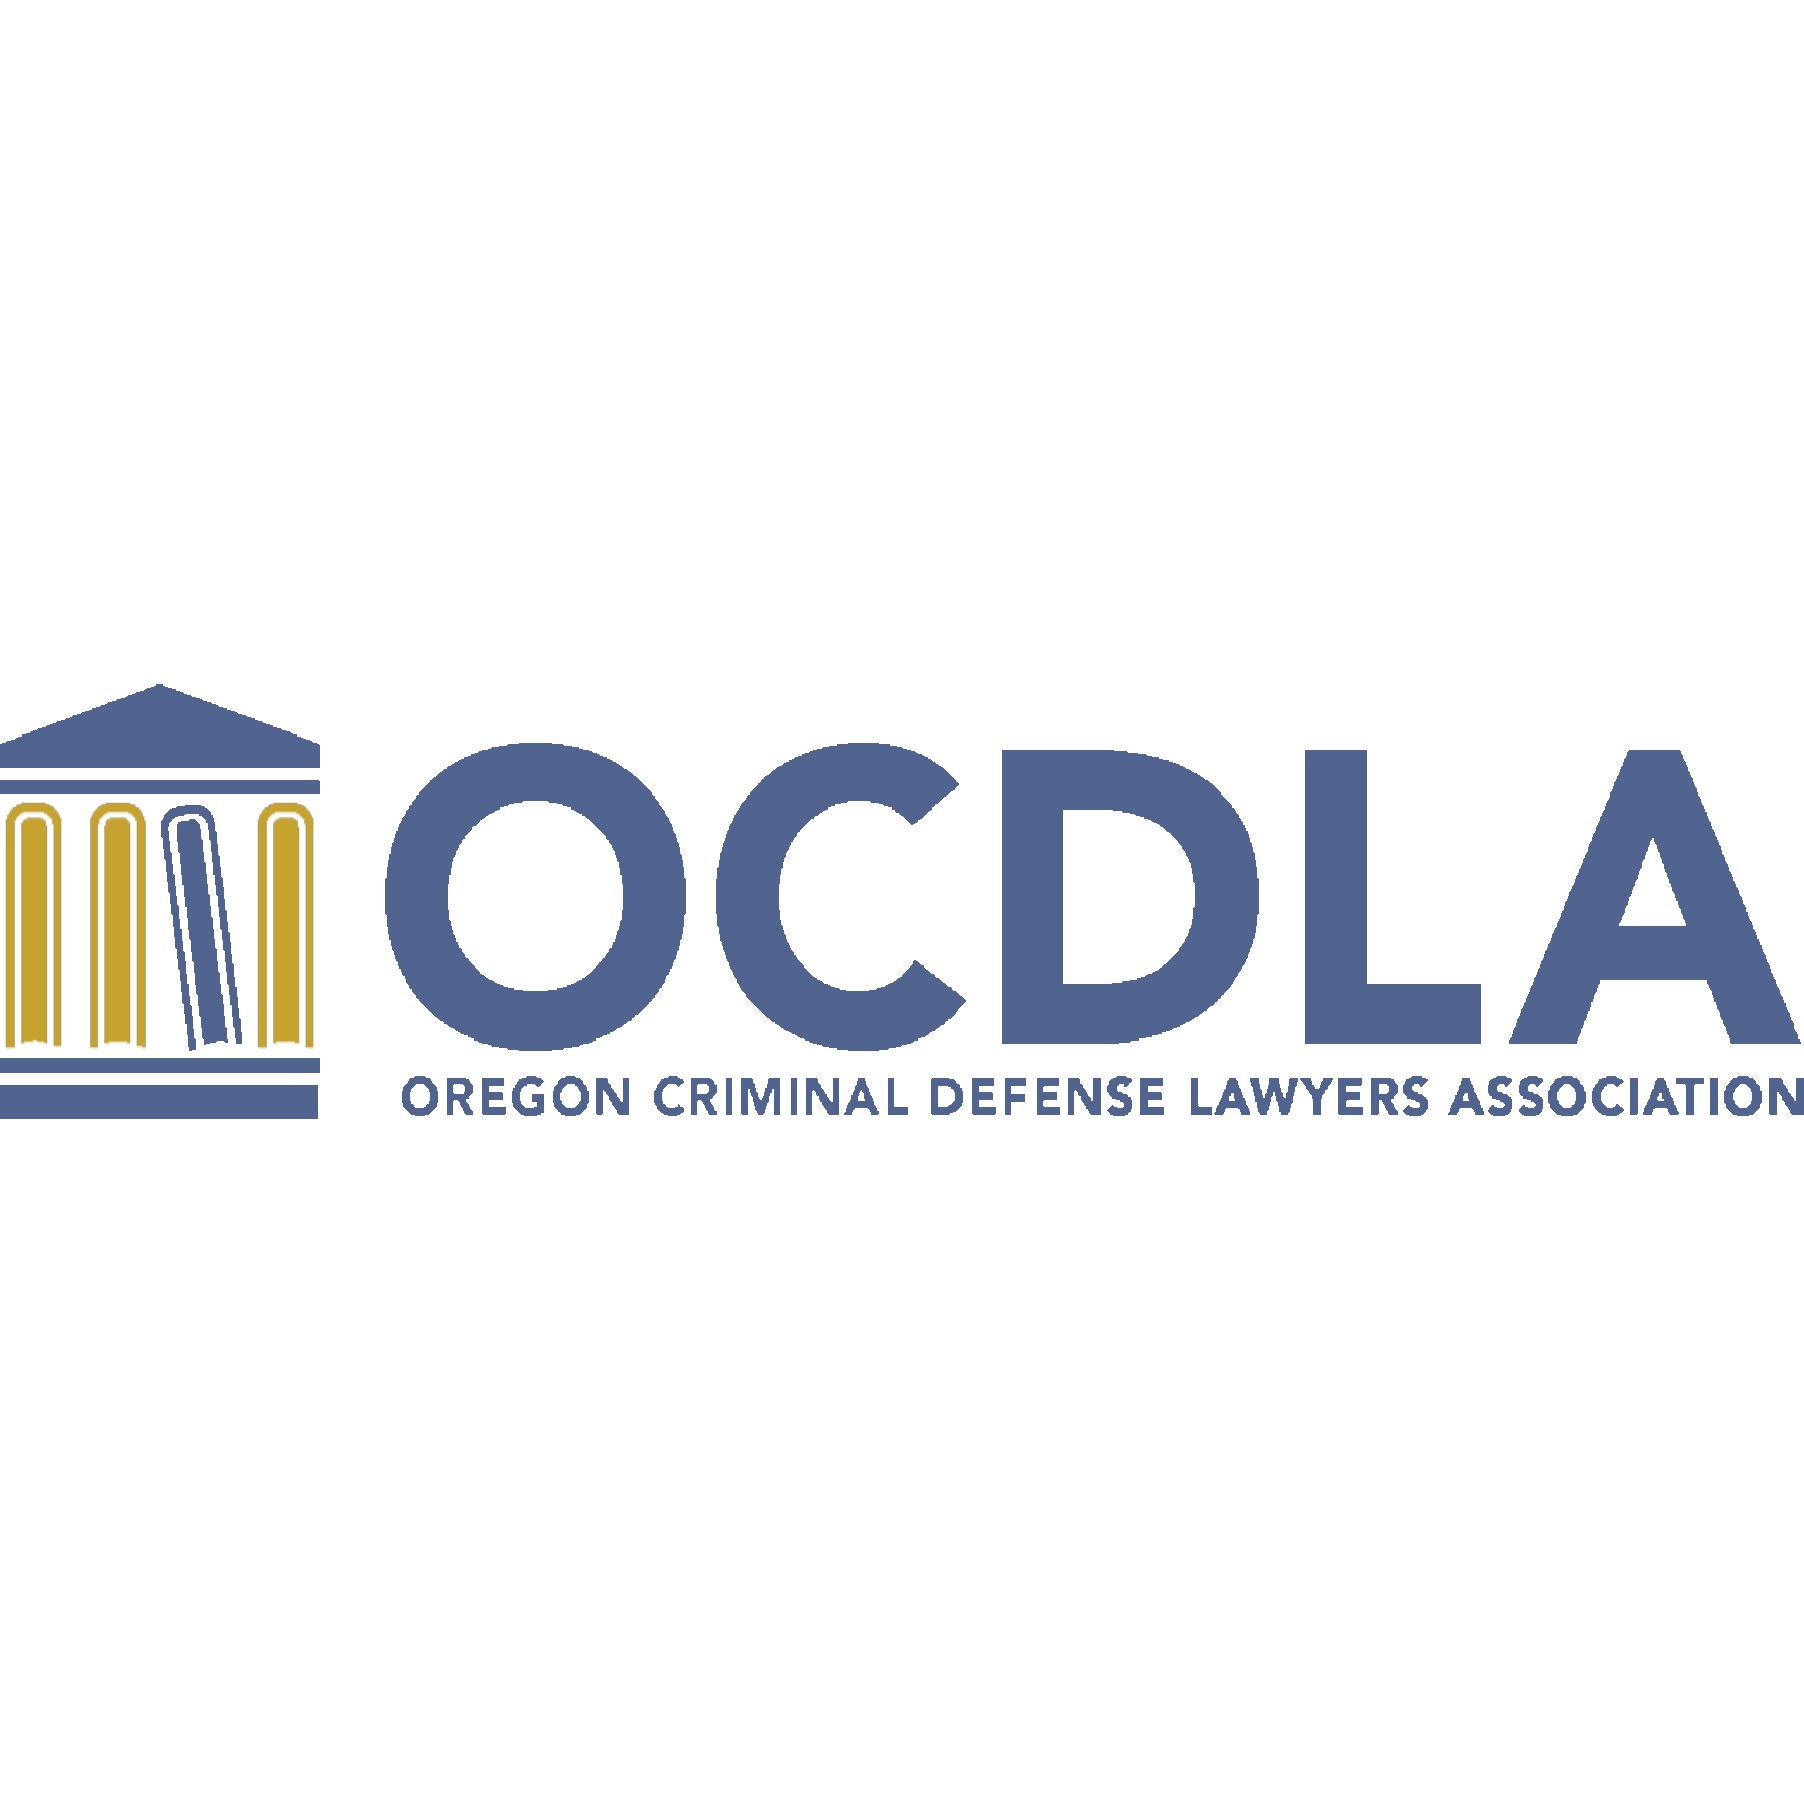 OCDLA - Oregon Criminal Defense Lawyers Association